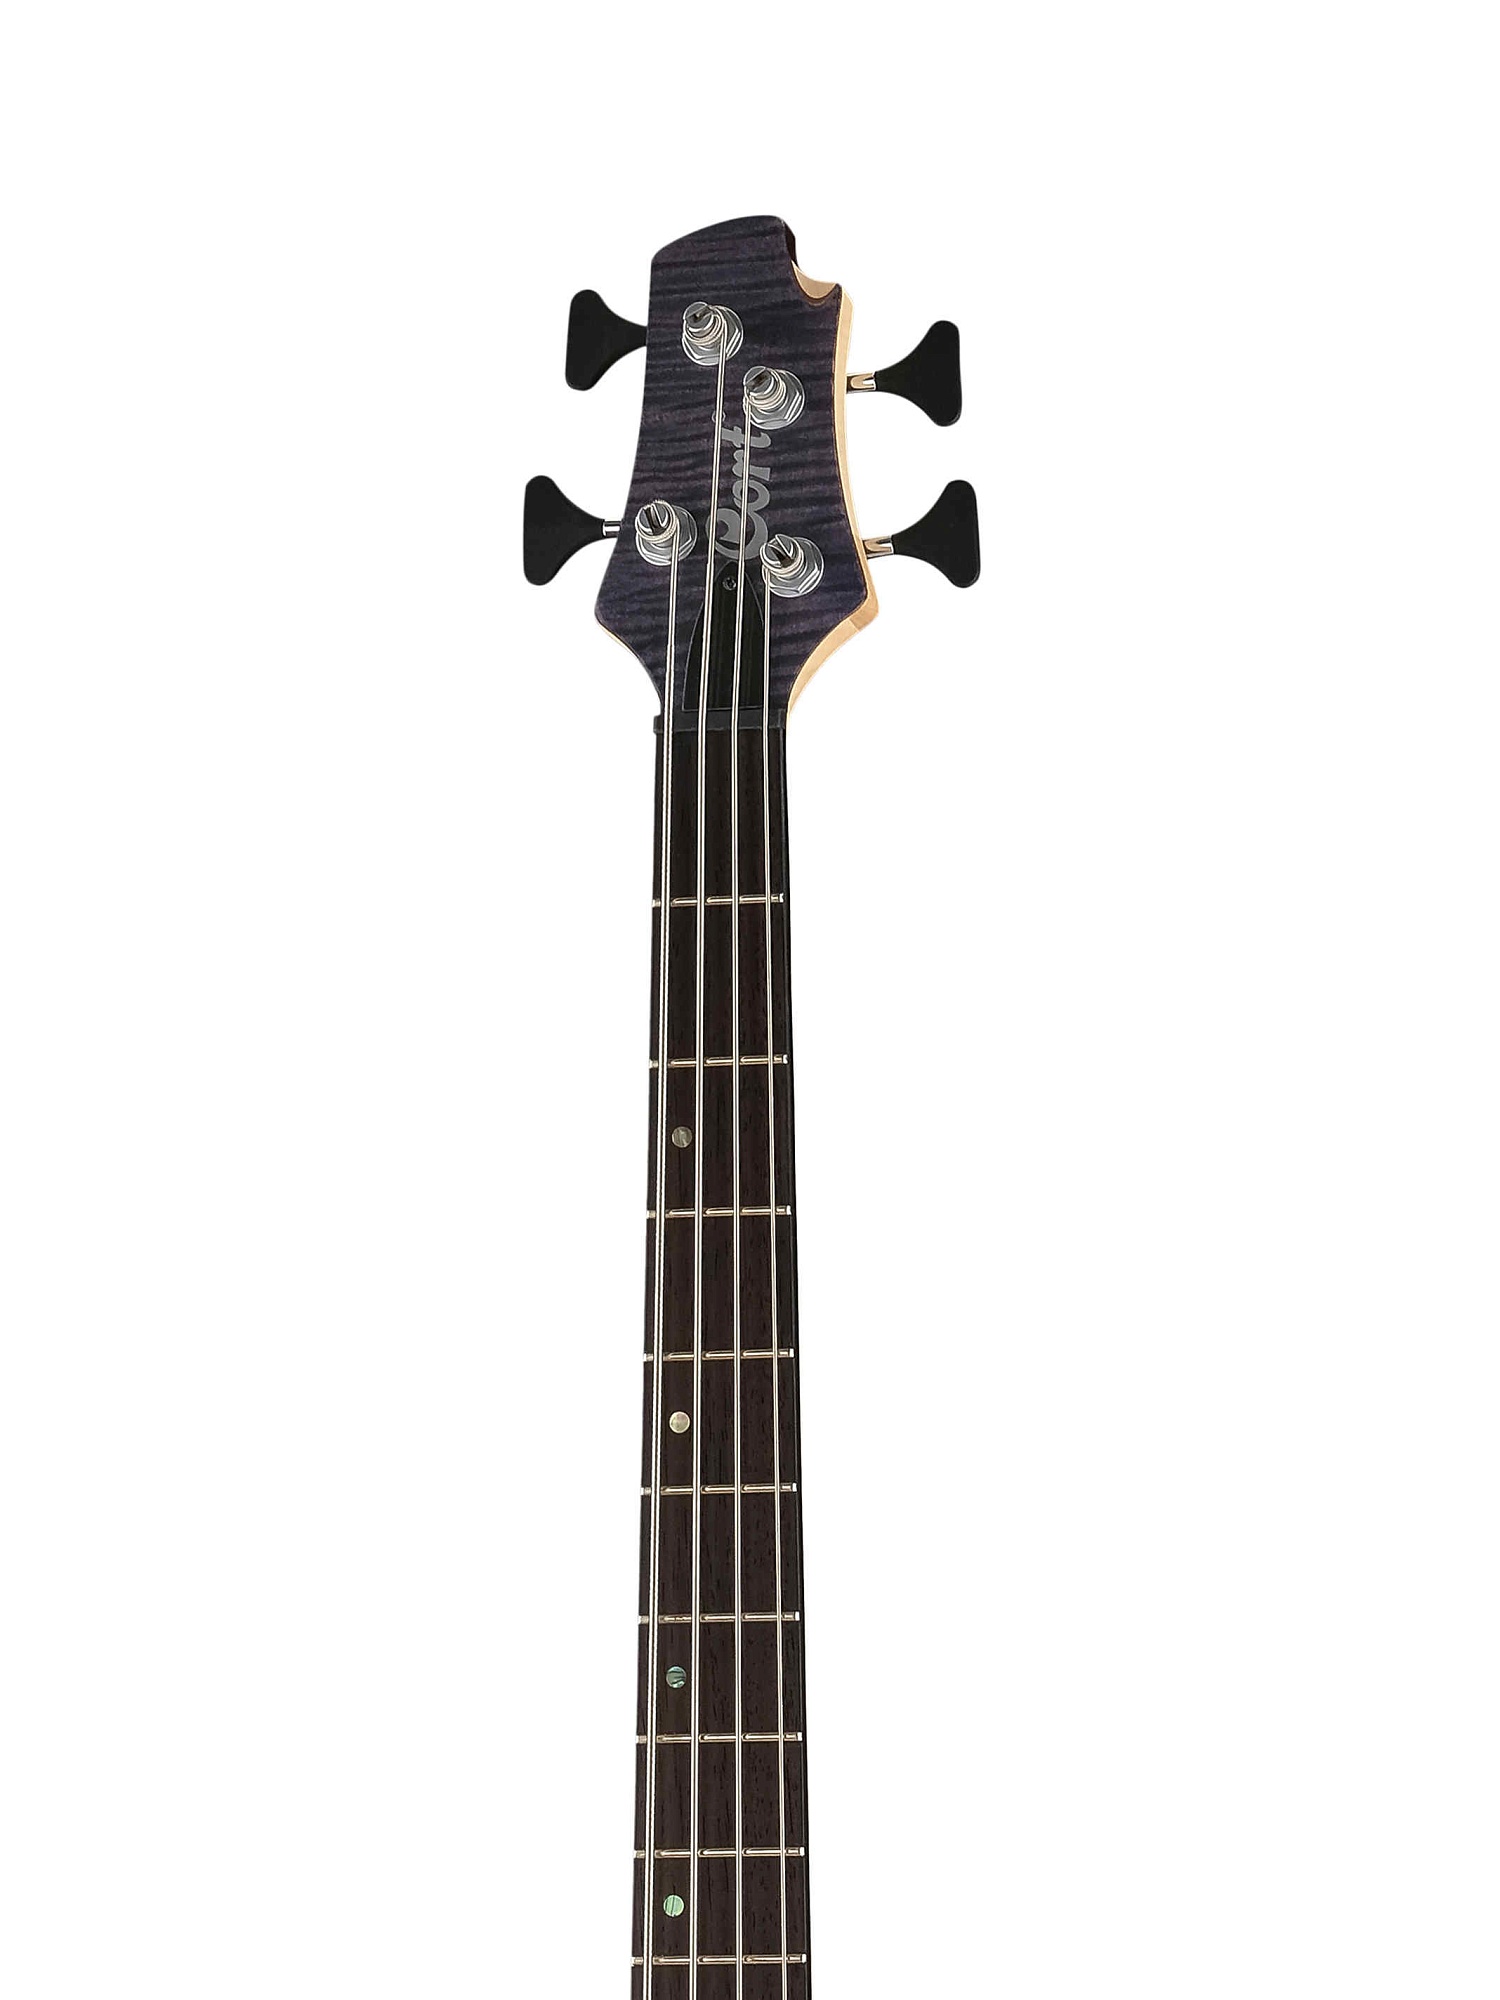 A4-Plus-FMMH-OPLB Artisan Series Бас-гитара, черная, Cort купить в prostore.me